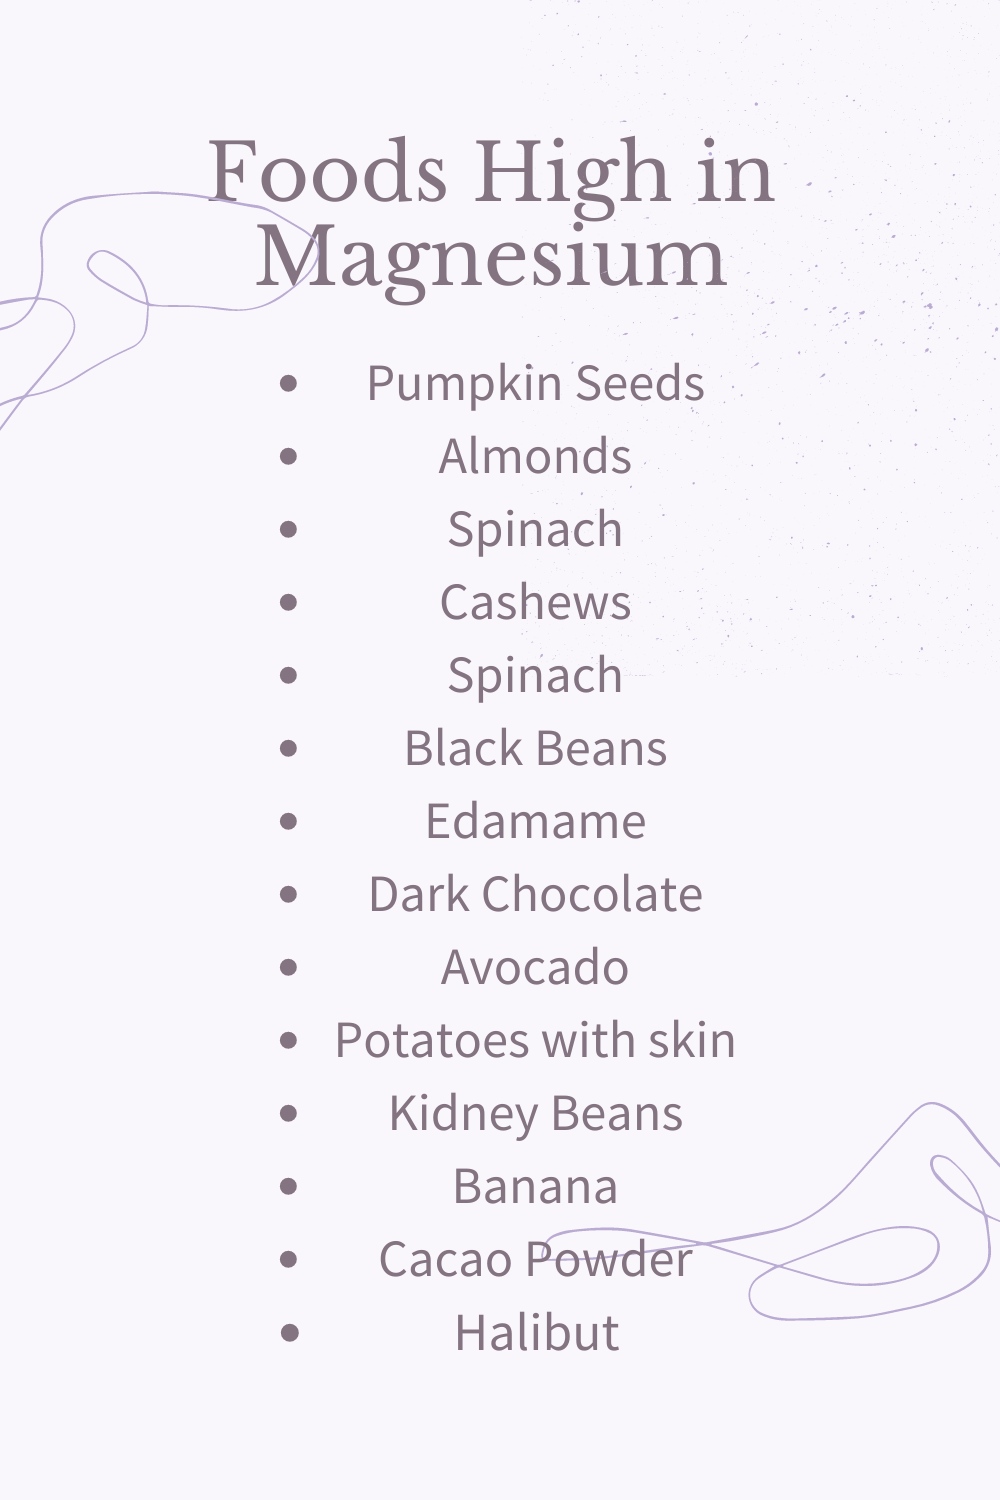 List of magnesium rich foods.